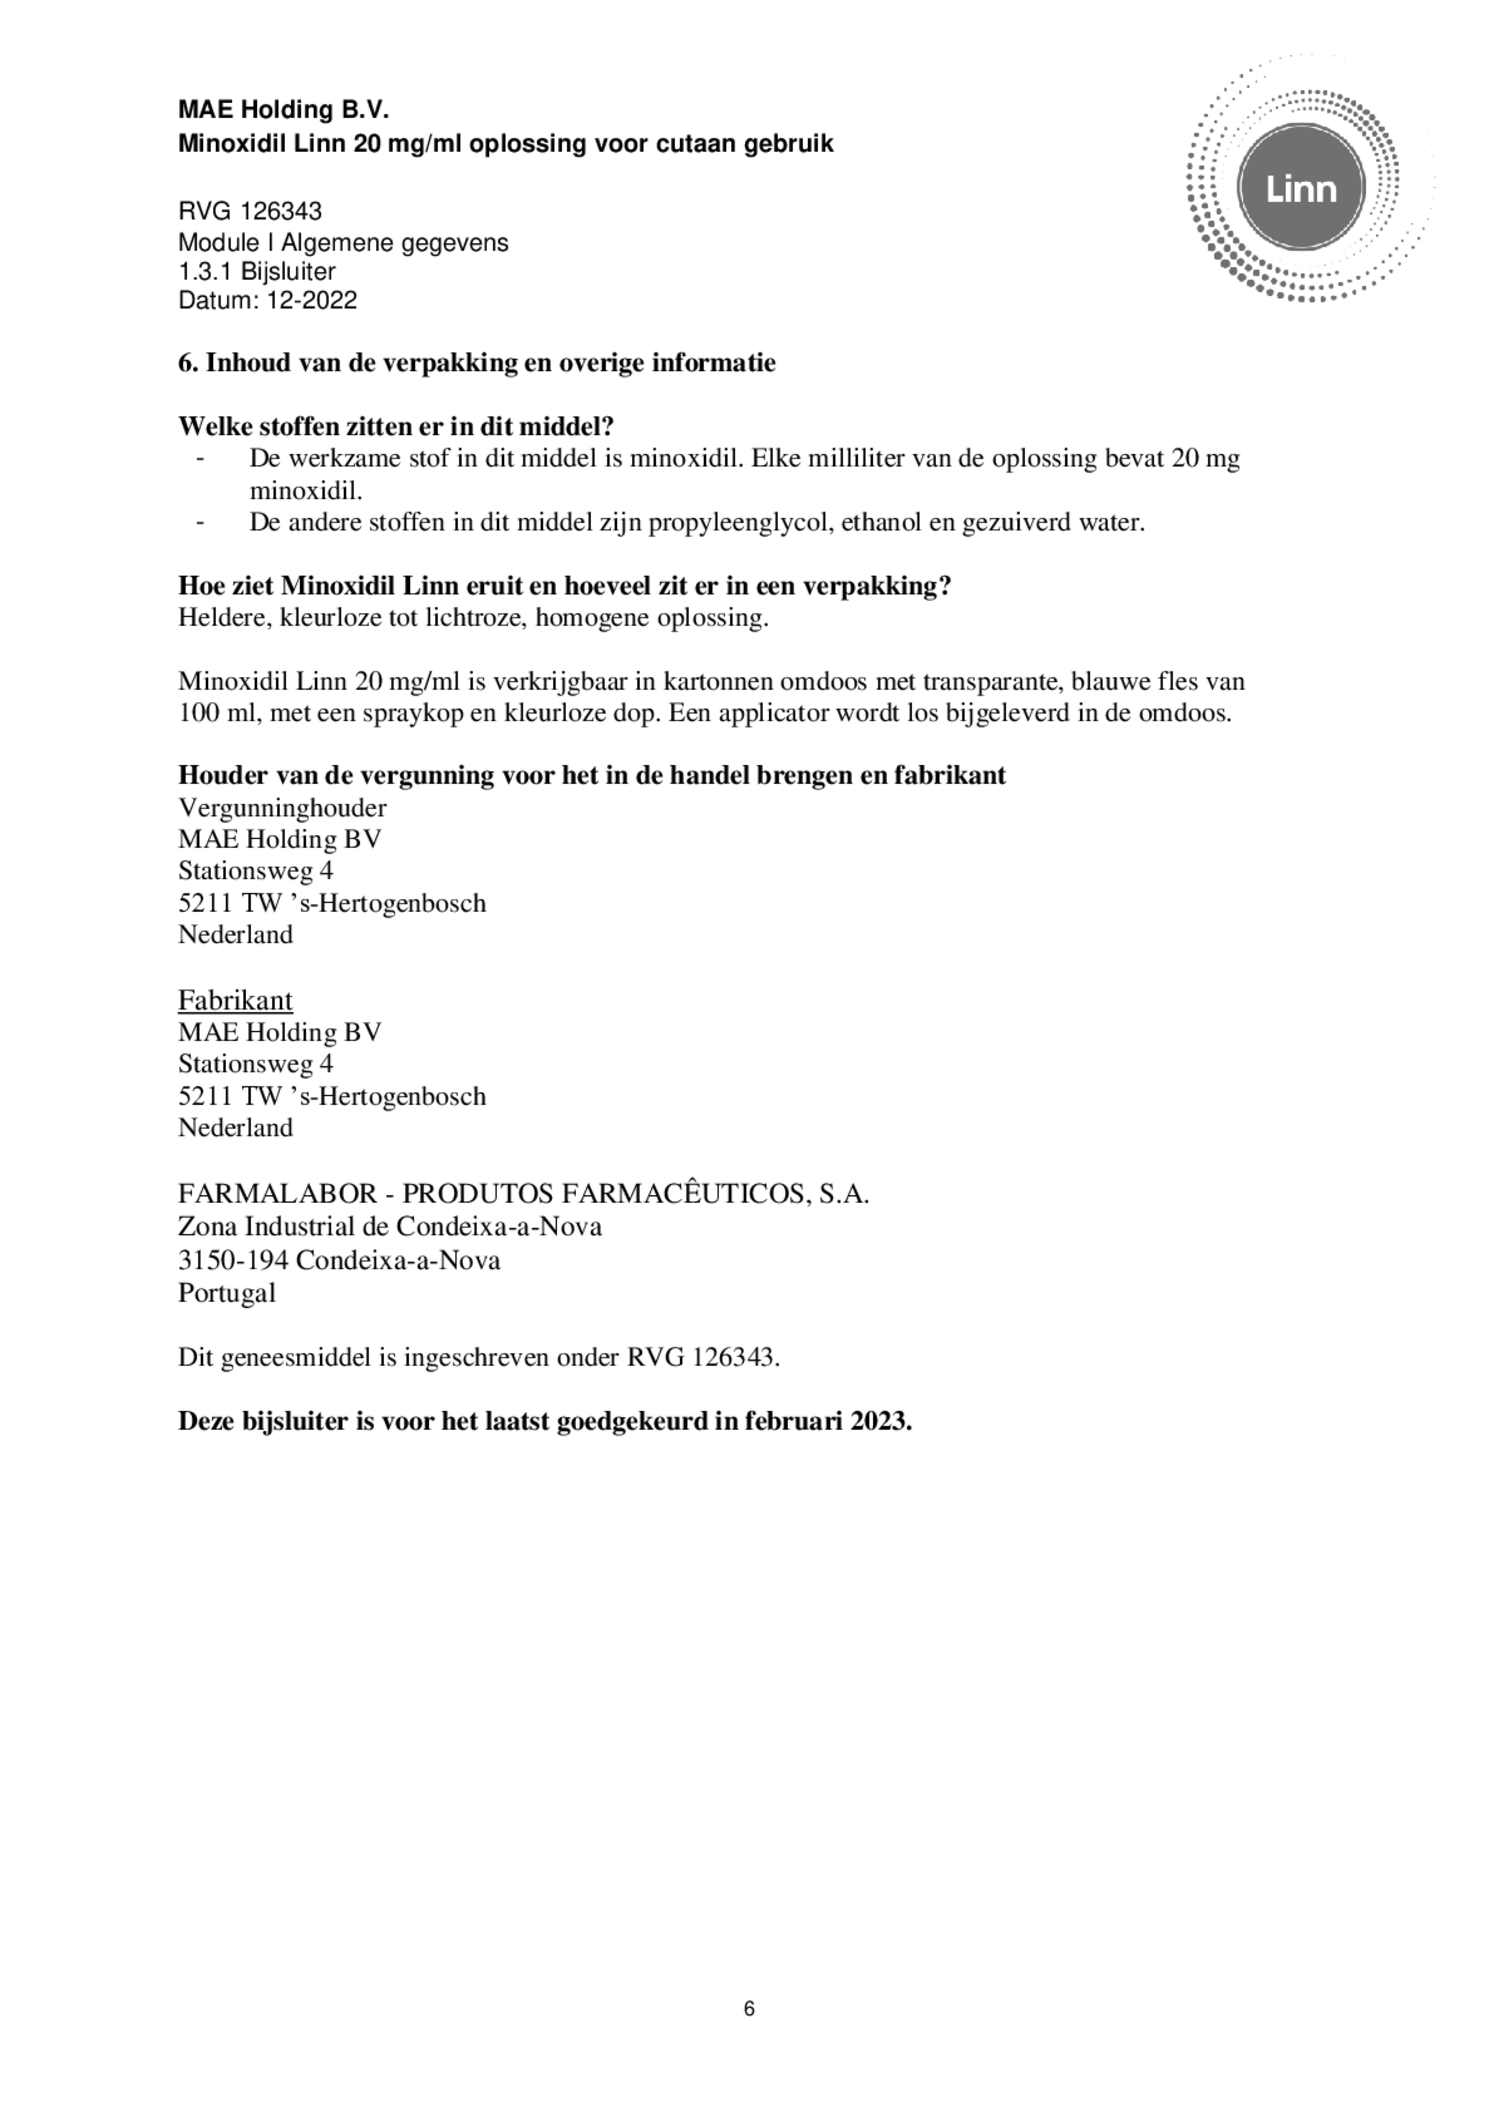 Minoxidil Linn 20 mg/ml oplossing afbeelding van document #6, bijsluiter